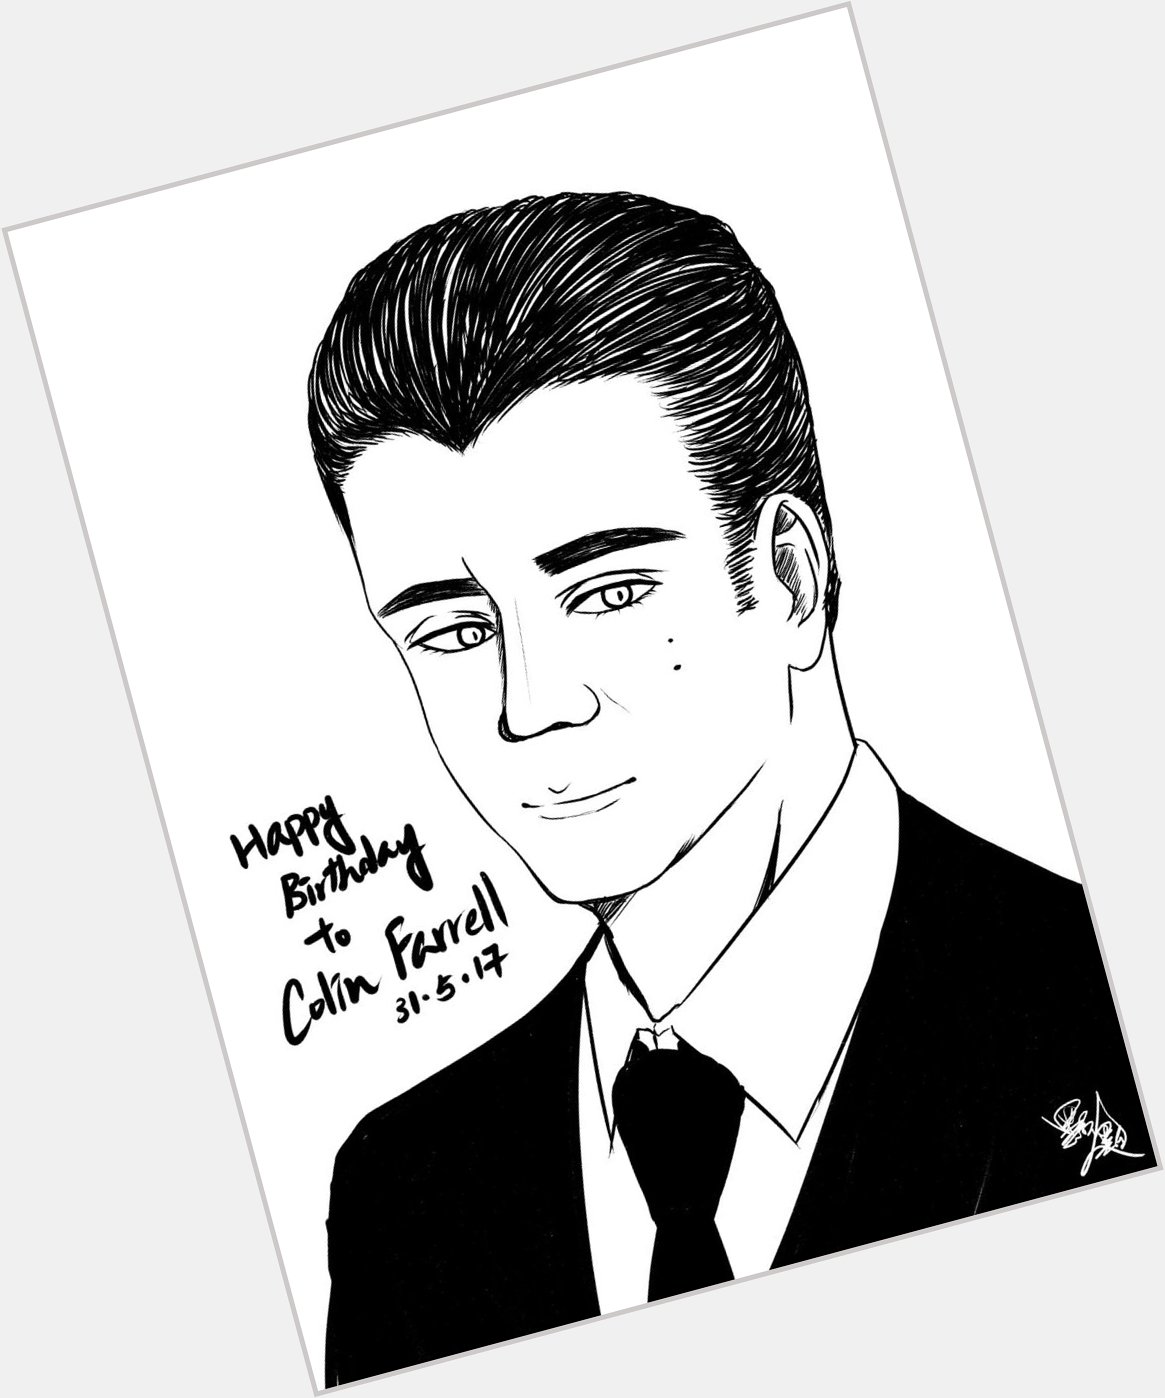 Happy birthday to Colin Farrell <3 